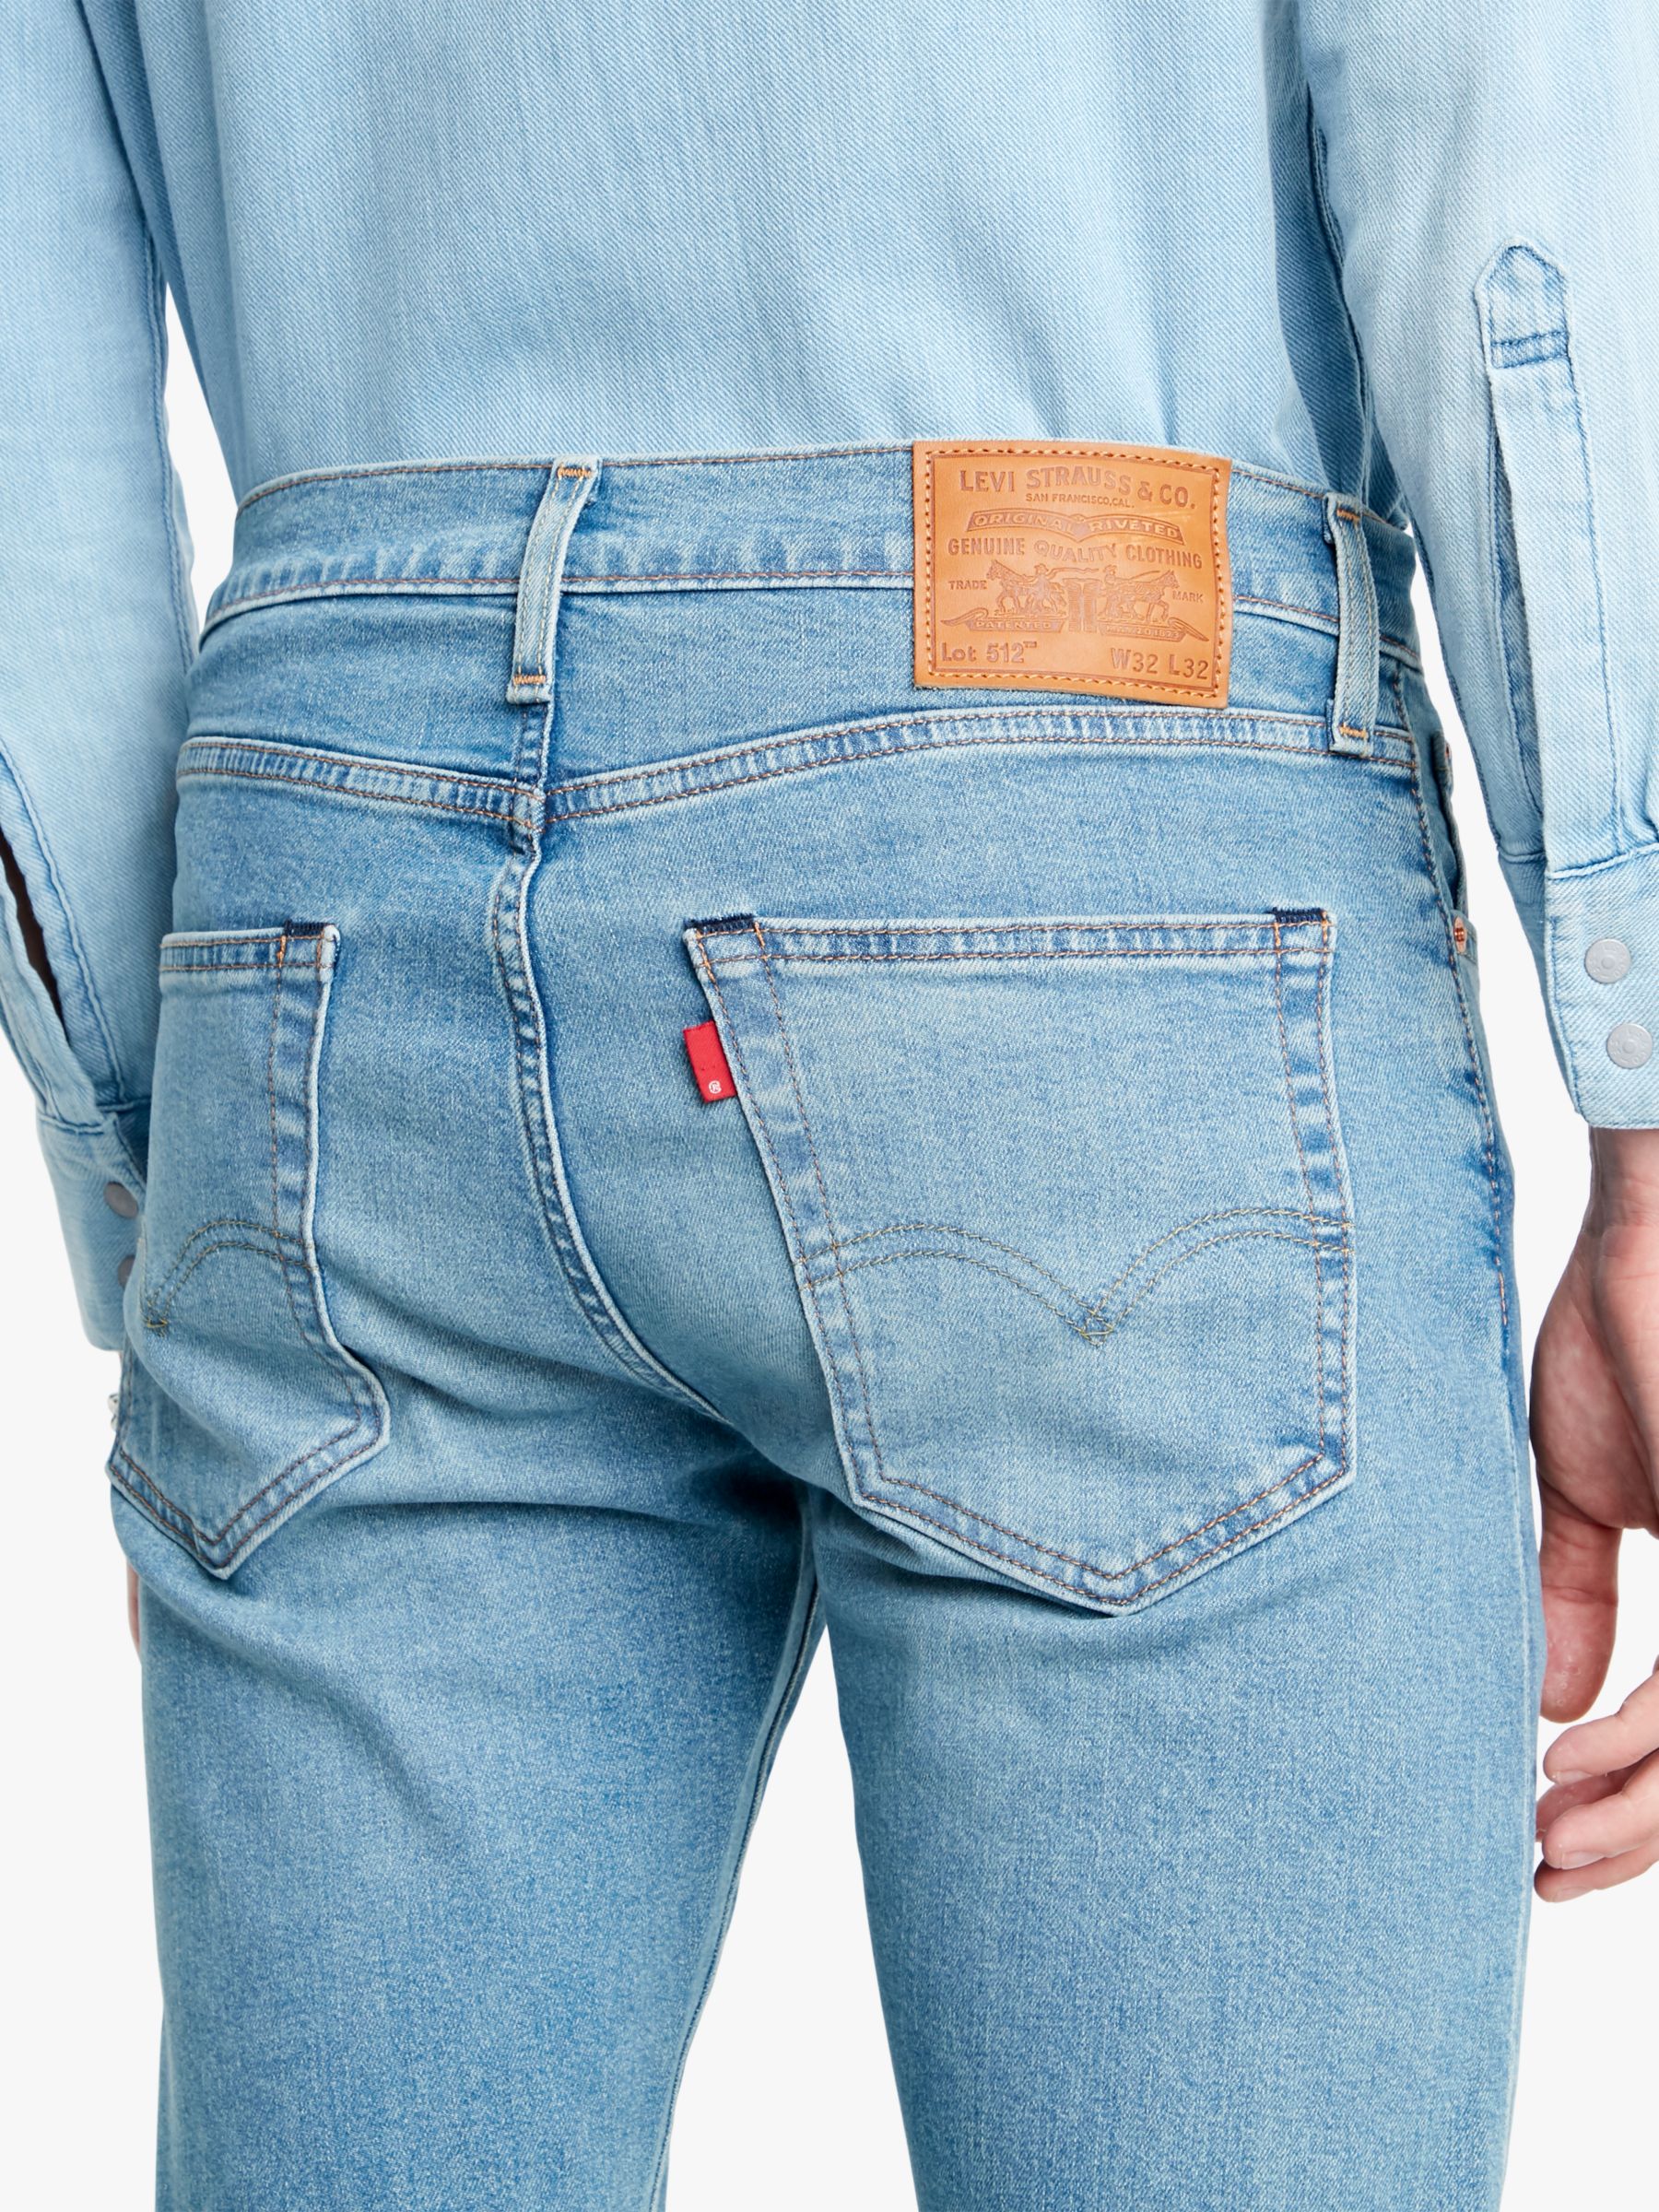 Levi's 512 Slim Tapered Jeans, Pelican Rust at John Lewis & Partners